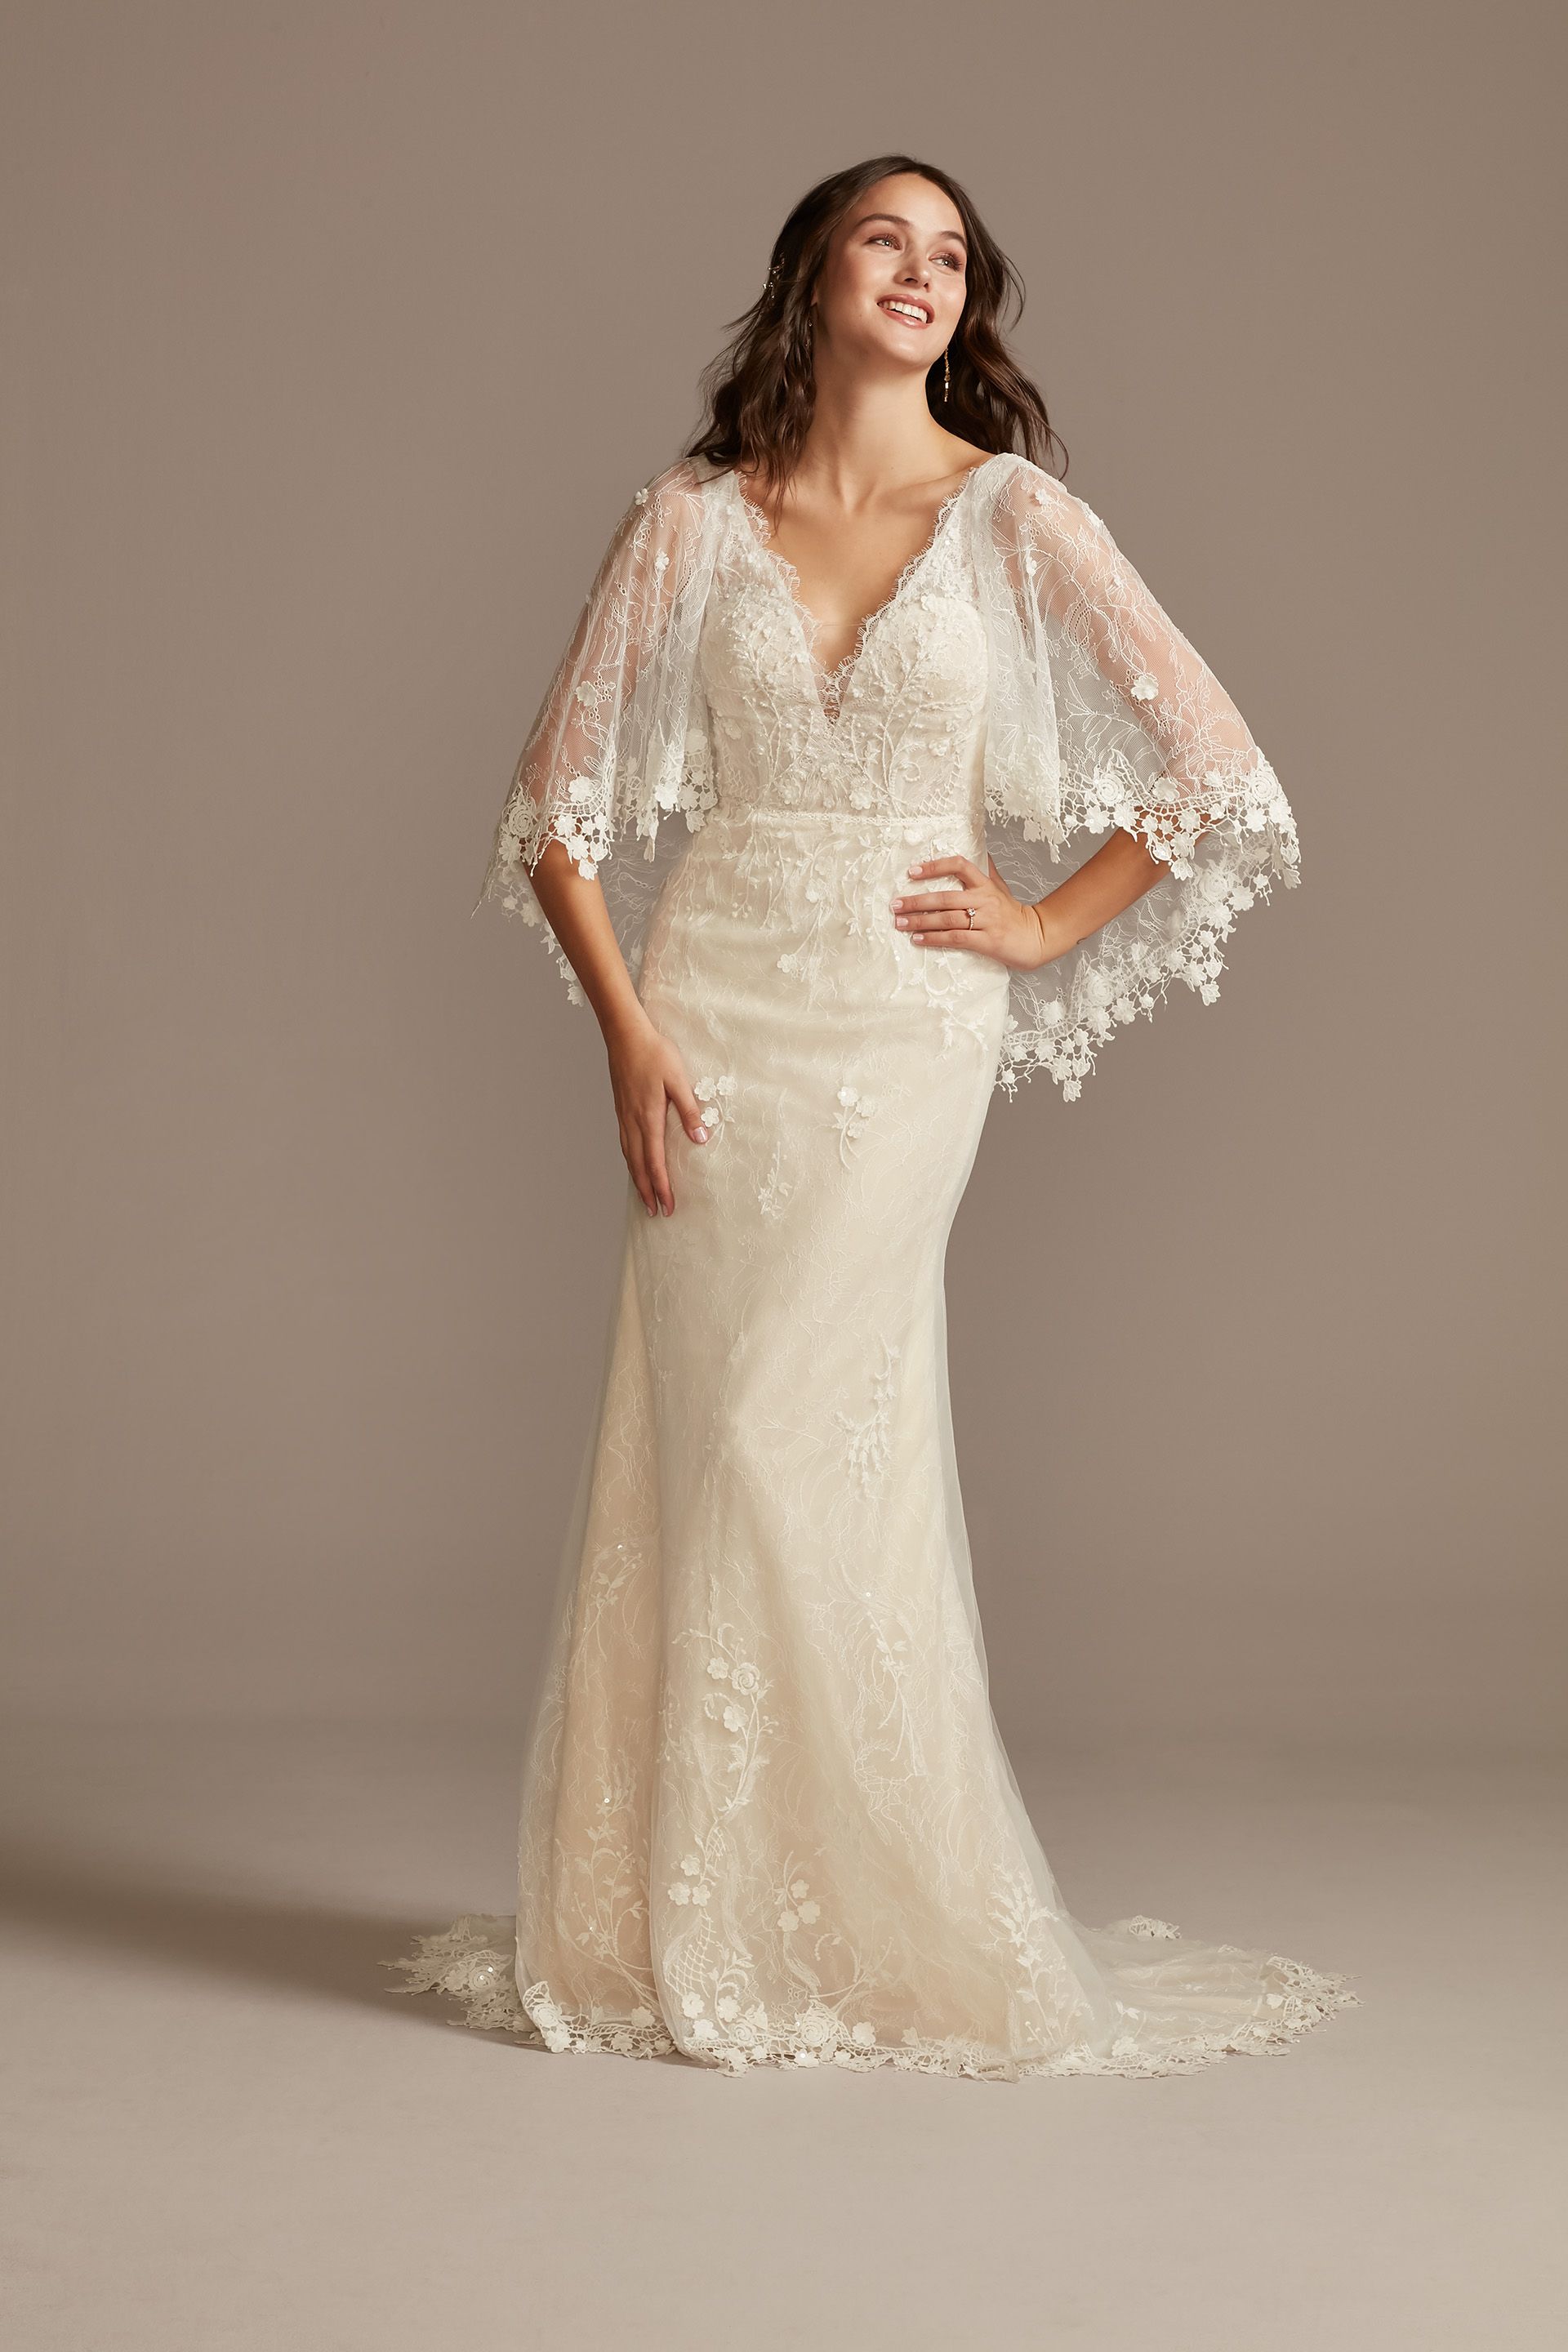 Lace Wedding Dress with Crochet Trim Capelet